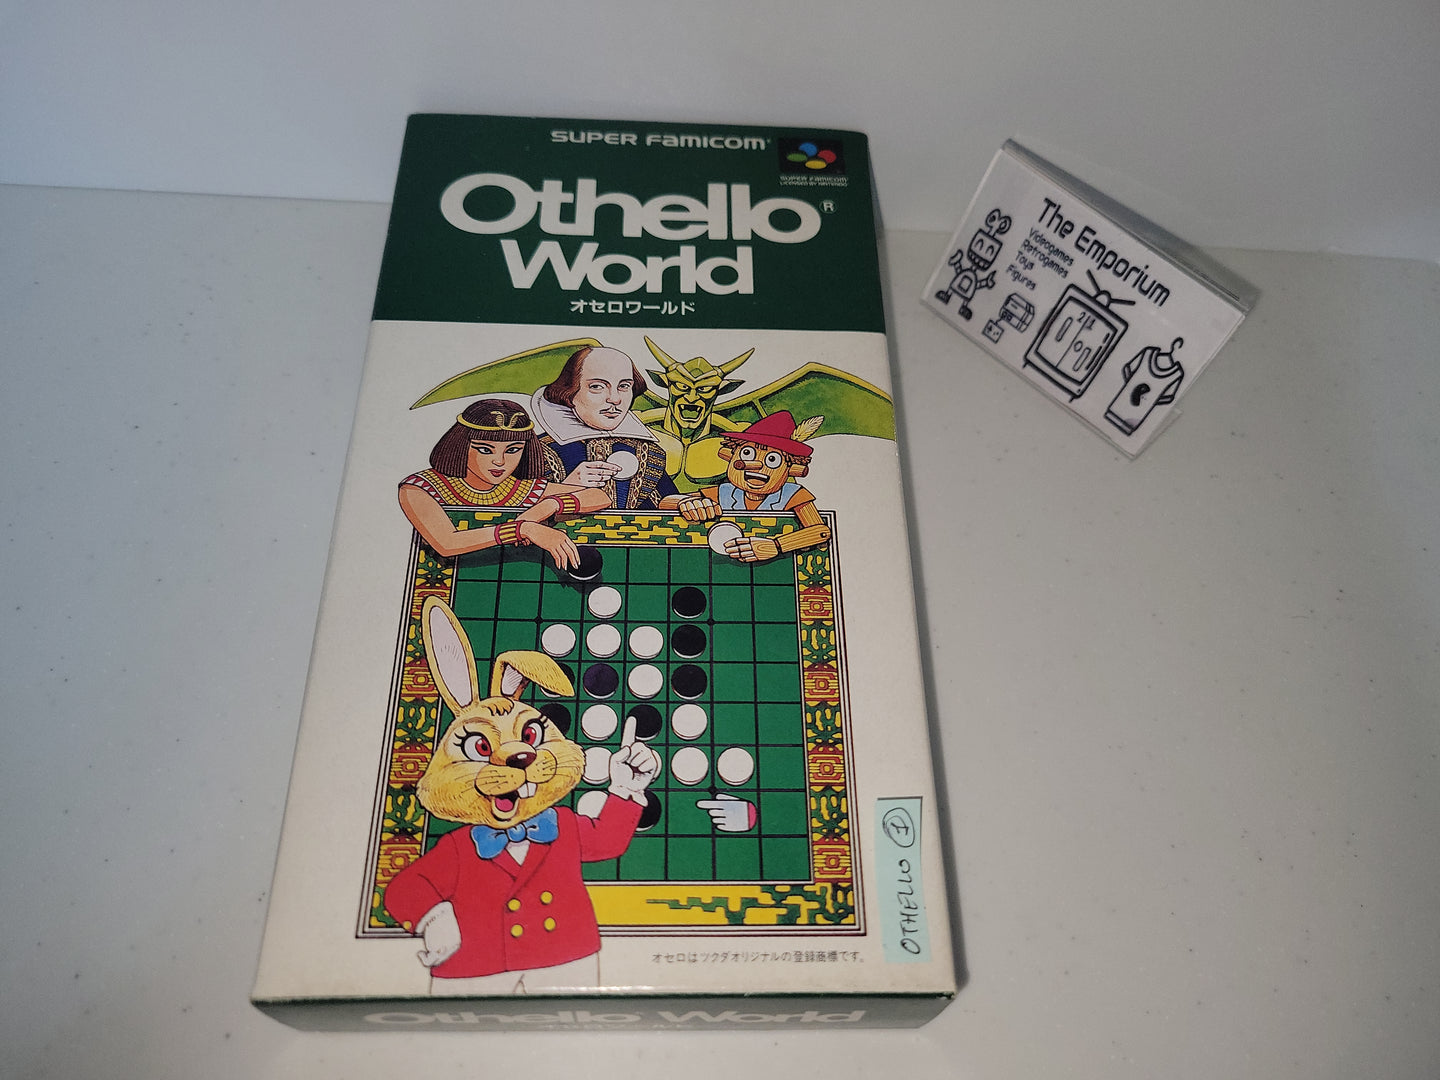 Othello World - Nintendo Sfc Super Famicom